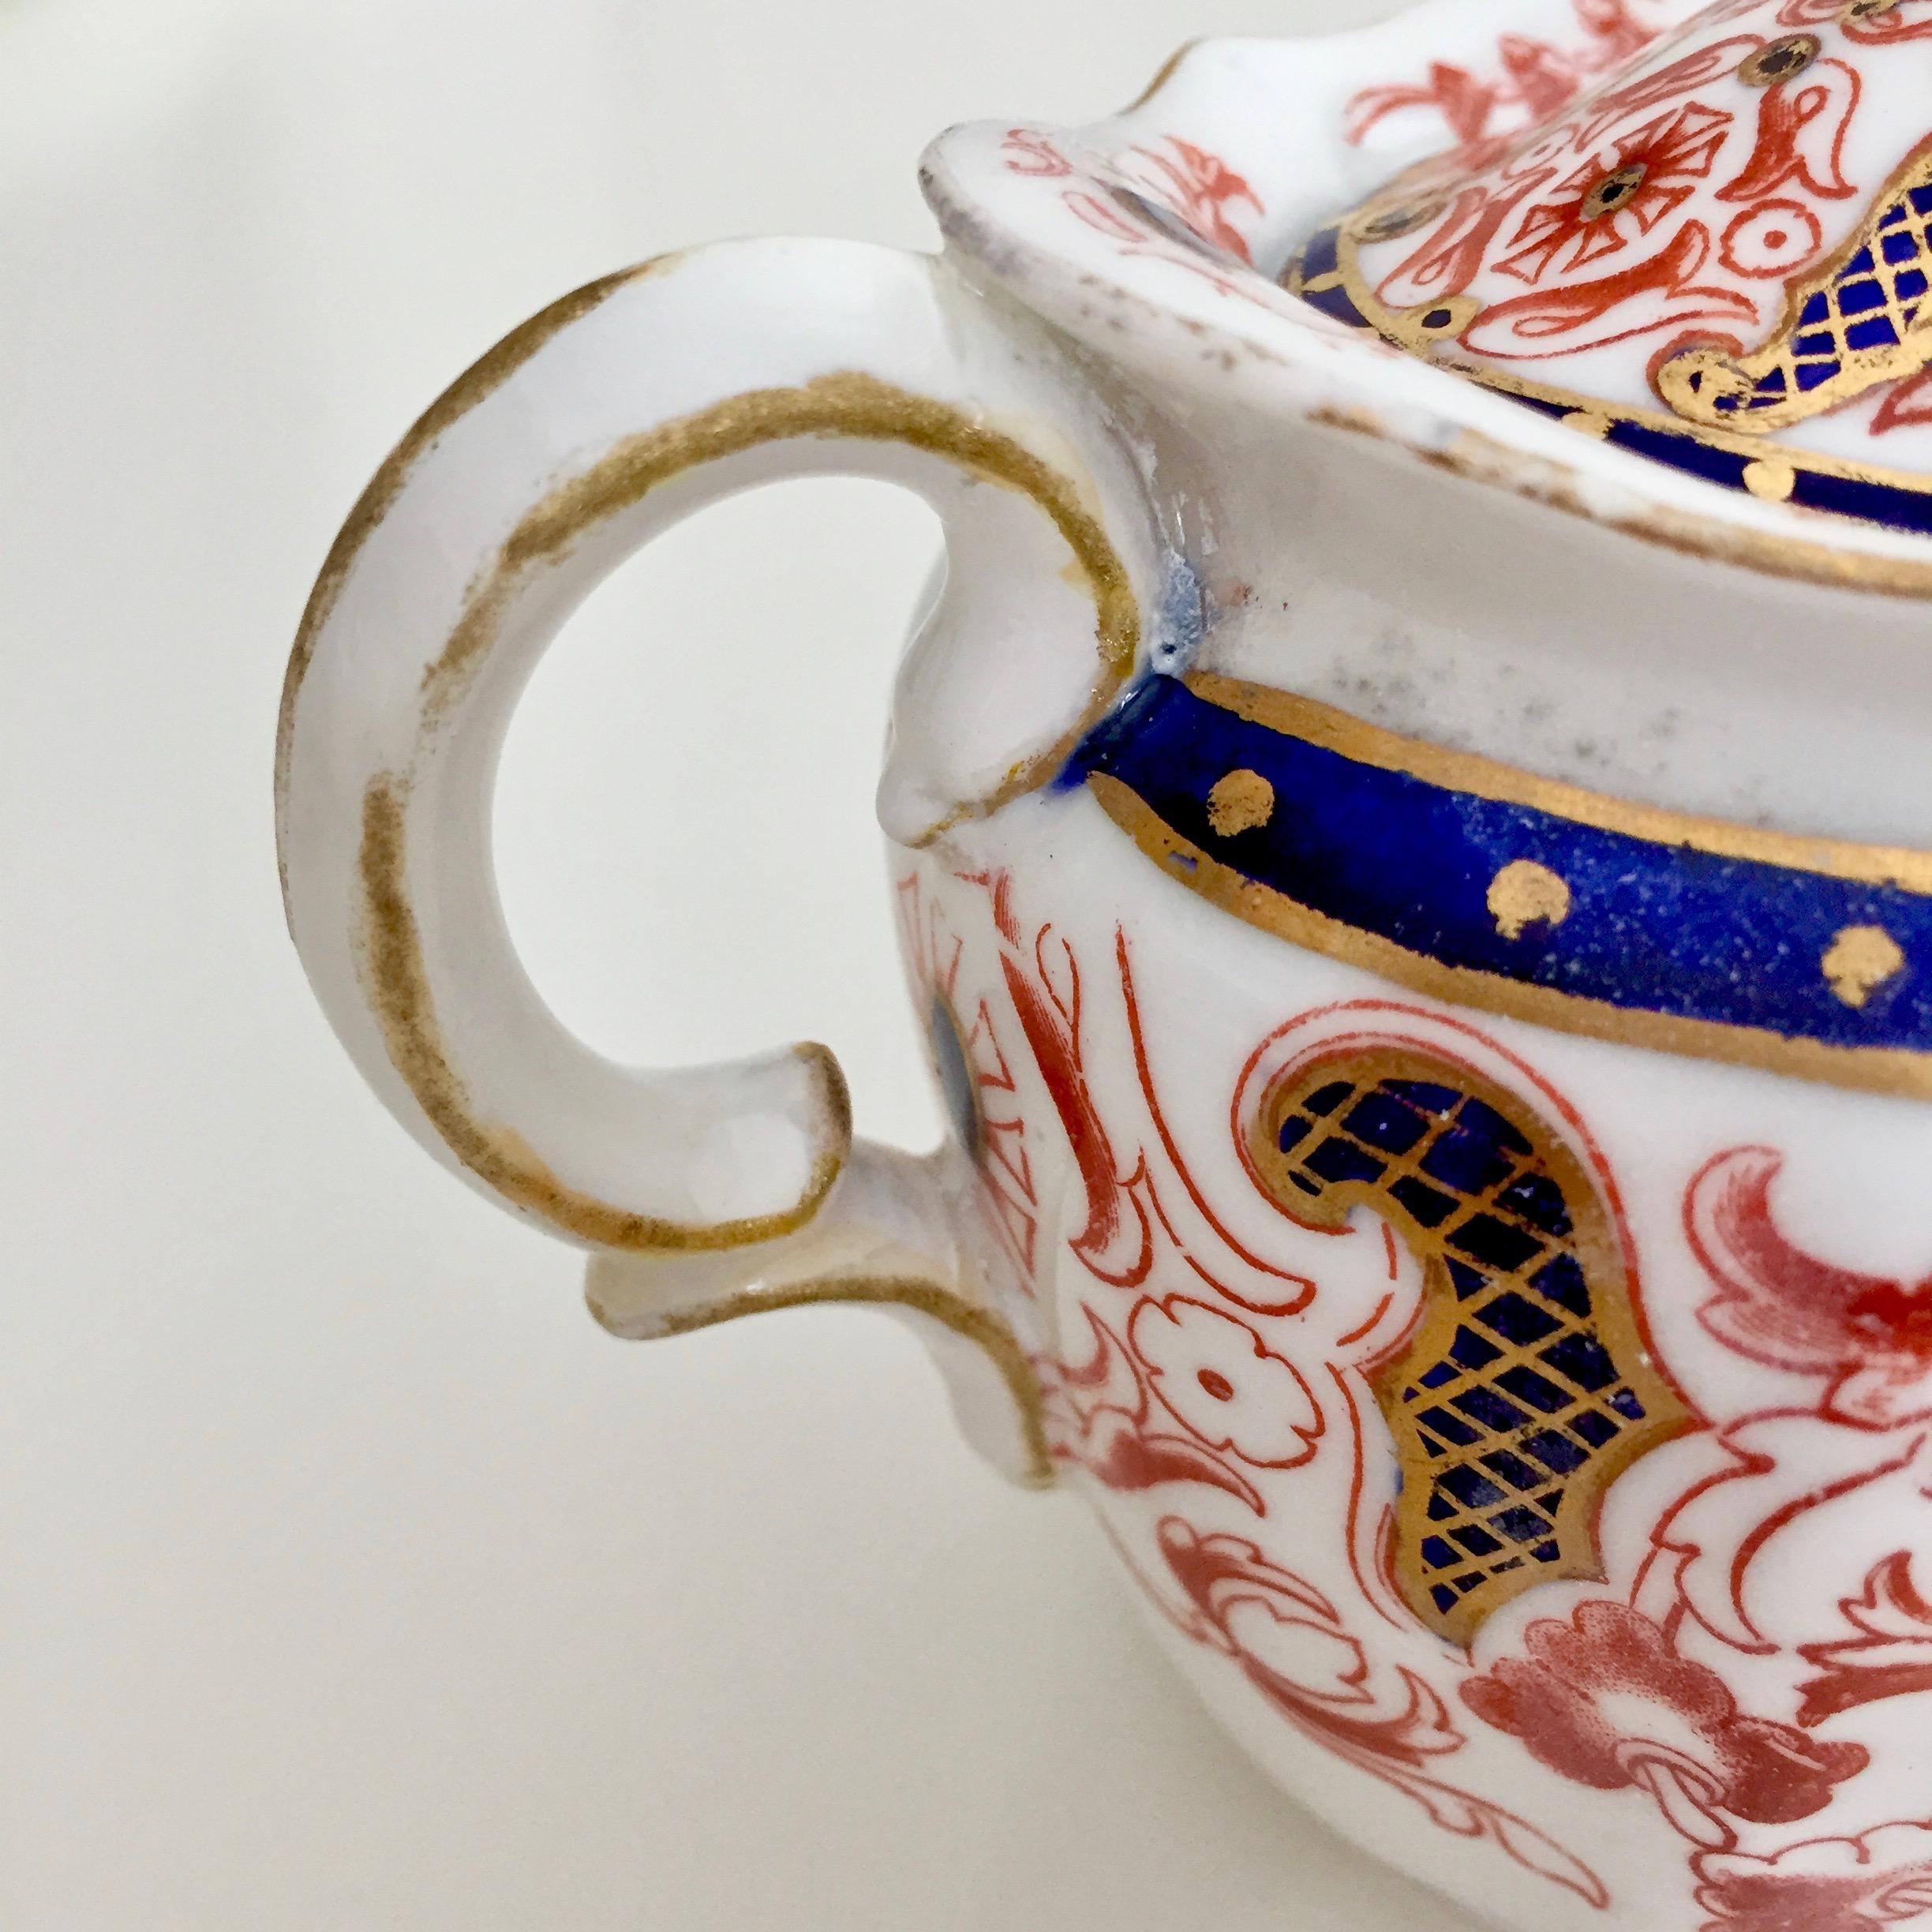 Royal Crown Derby Breakfast Tea Set, Imari Pattern, 1899 5